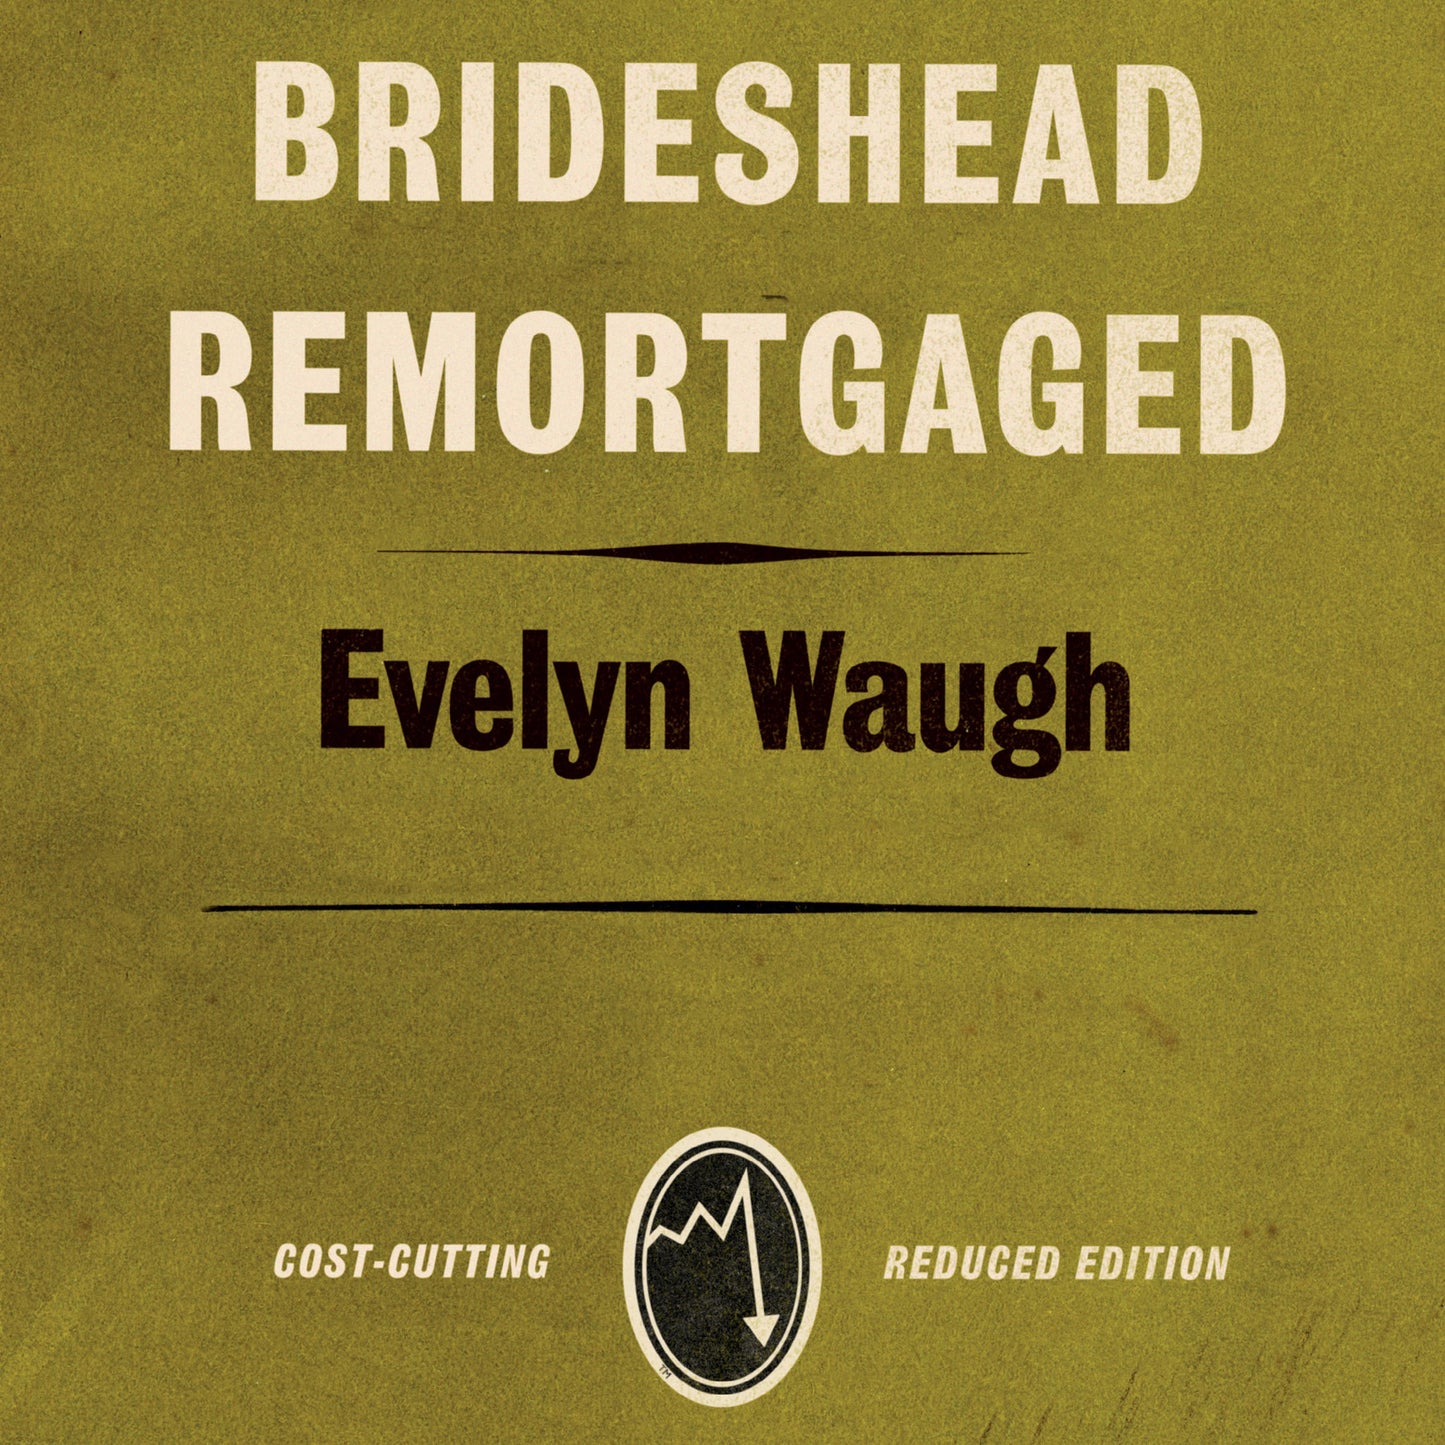 Brideshead Remortgaged Book Cover Print